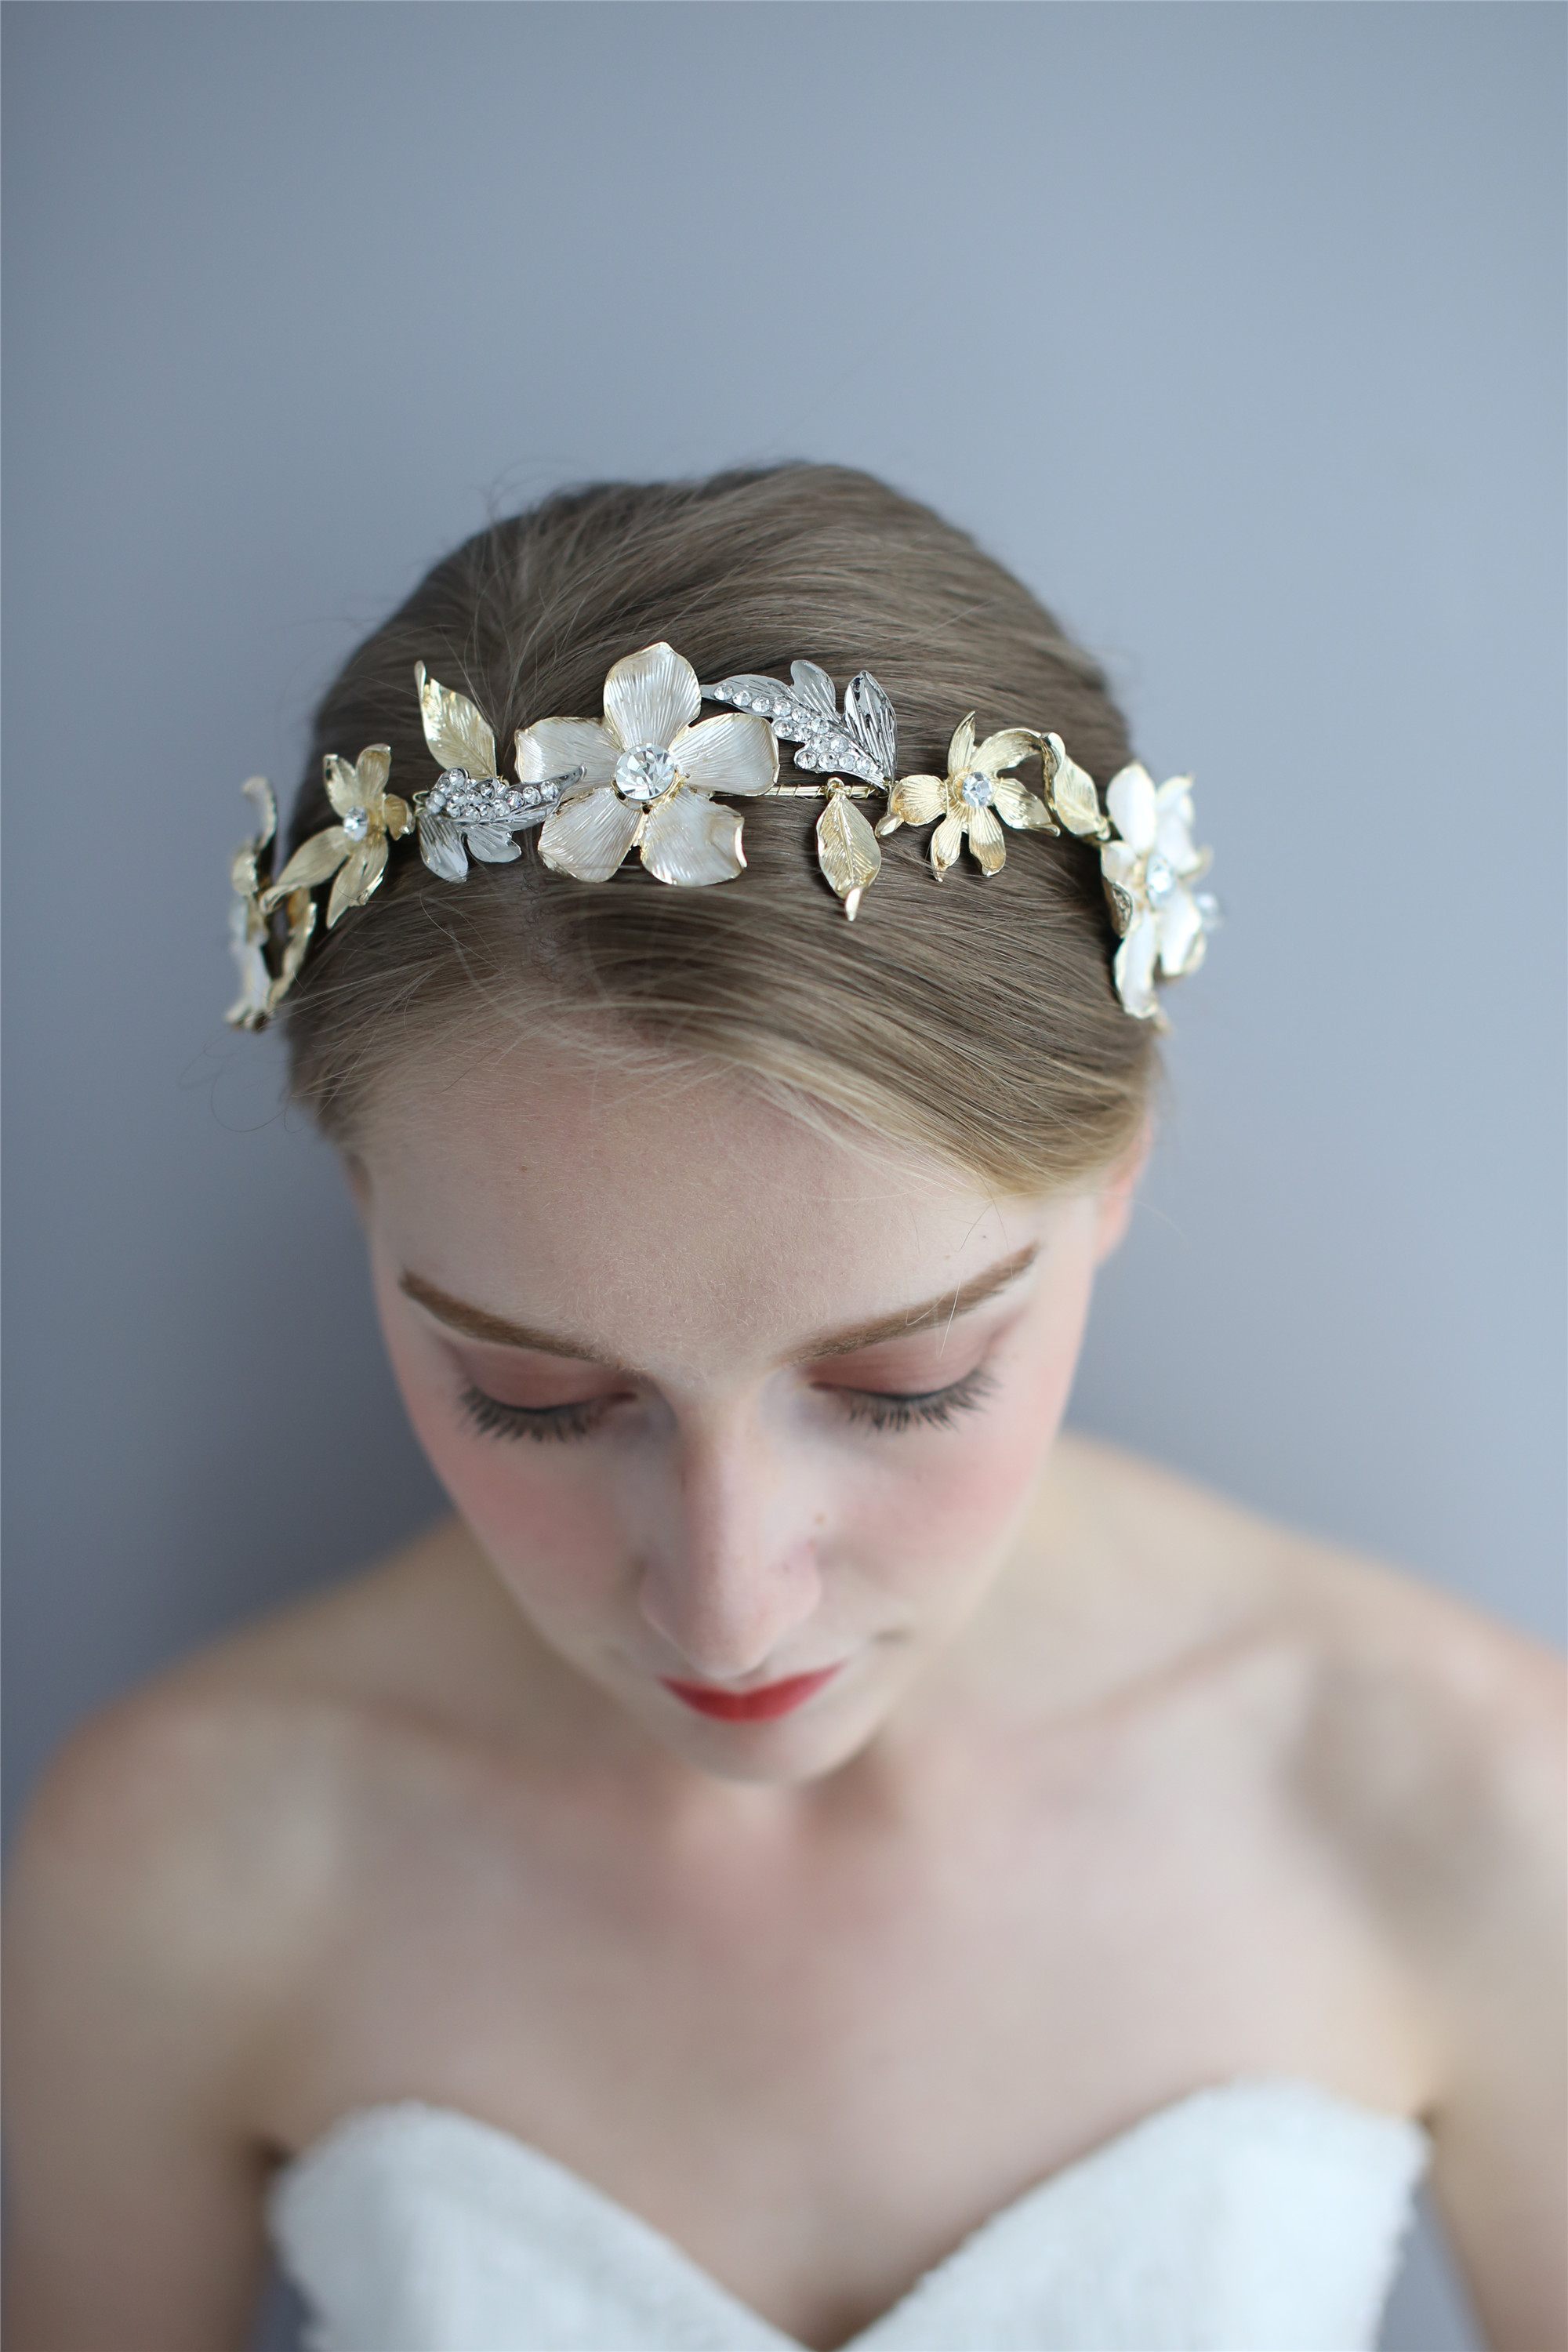 Newest Crystal Hairband Accessories Headdress Handmade Bridal Wedding Jewelry Headpiece For Women